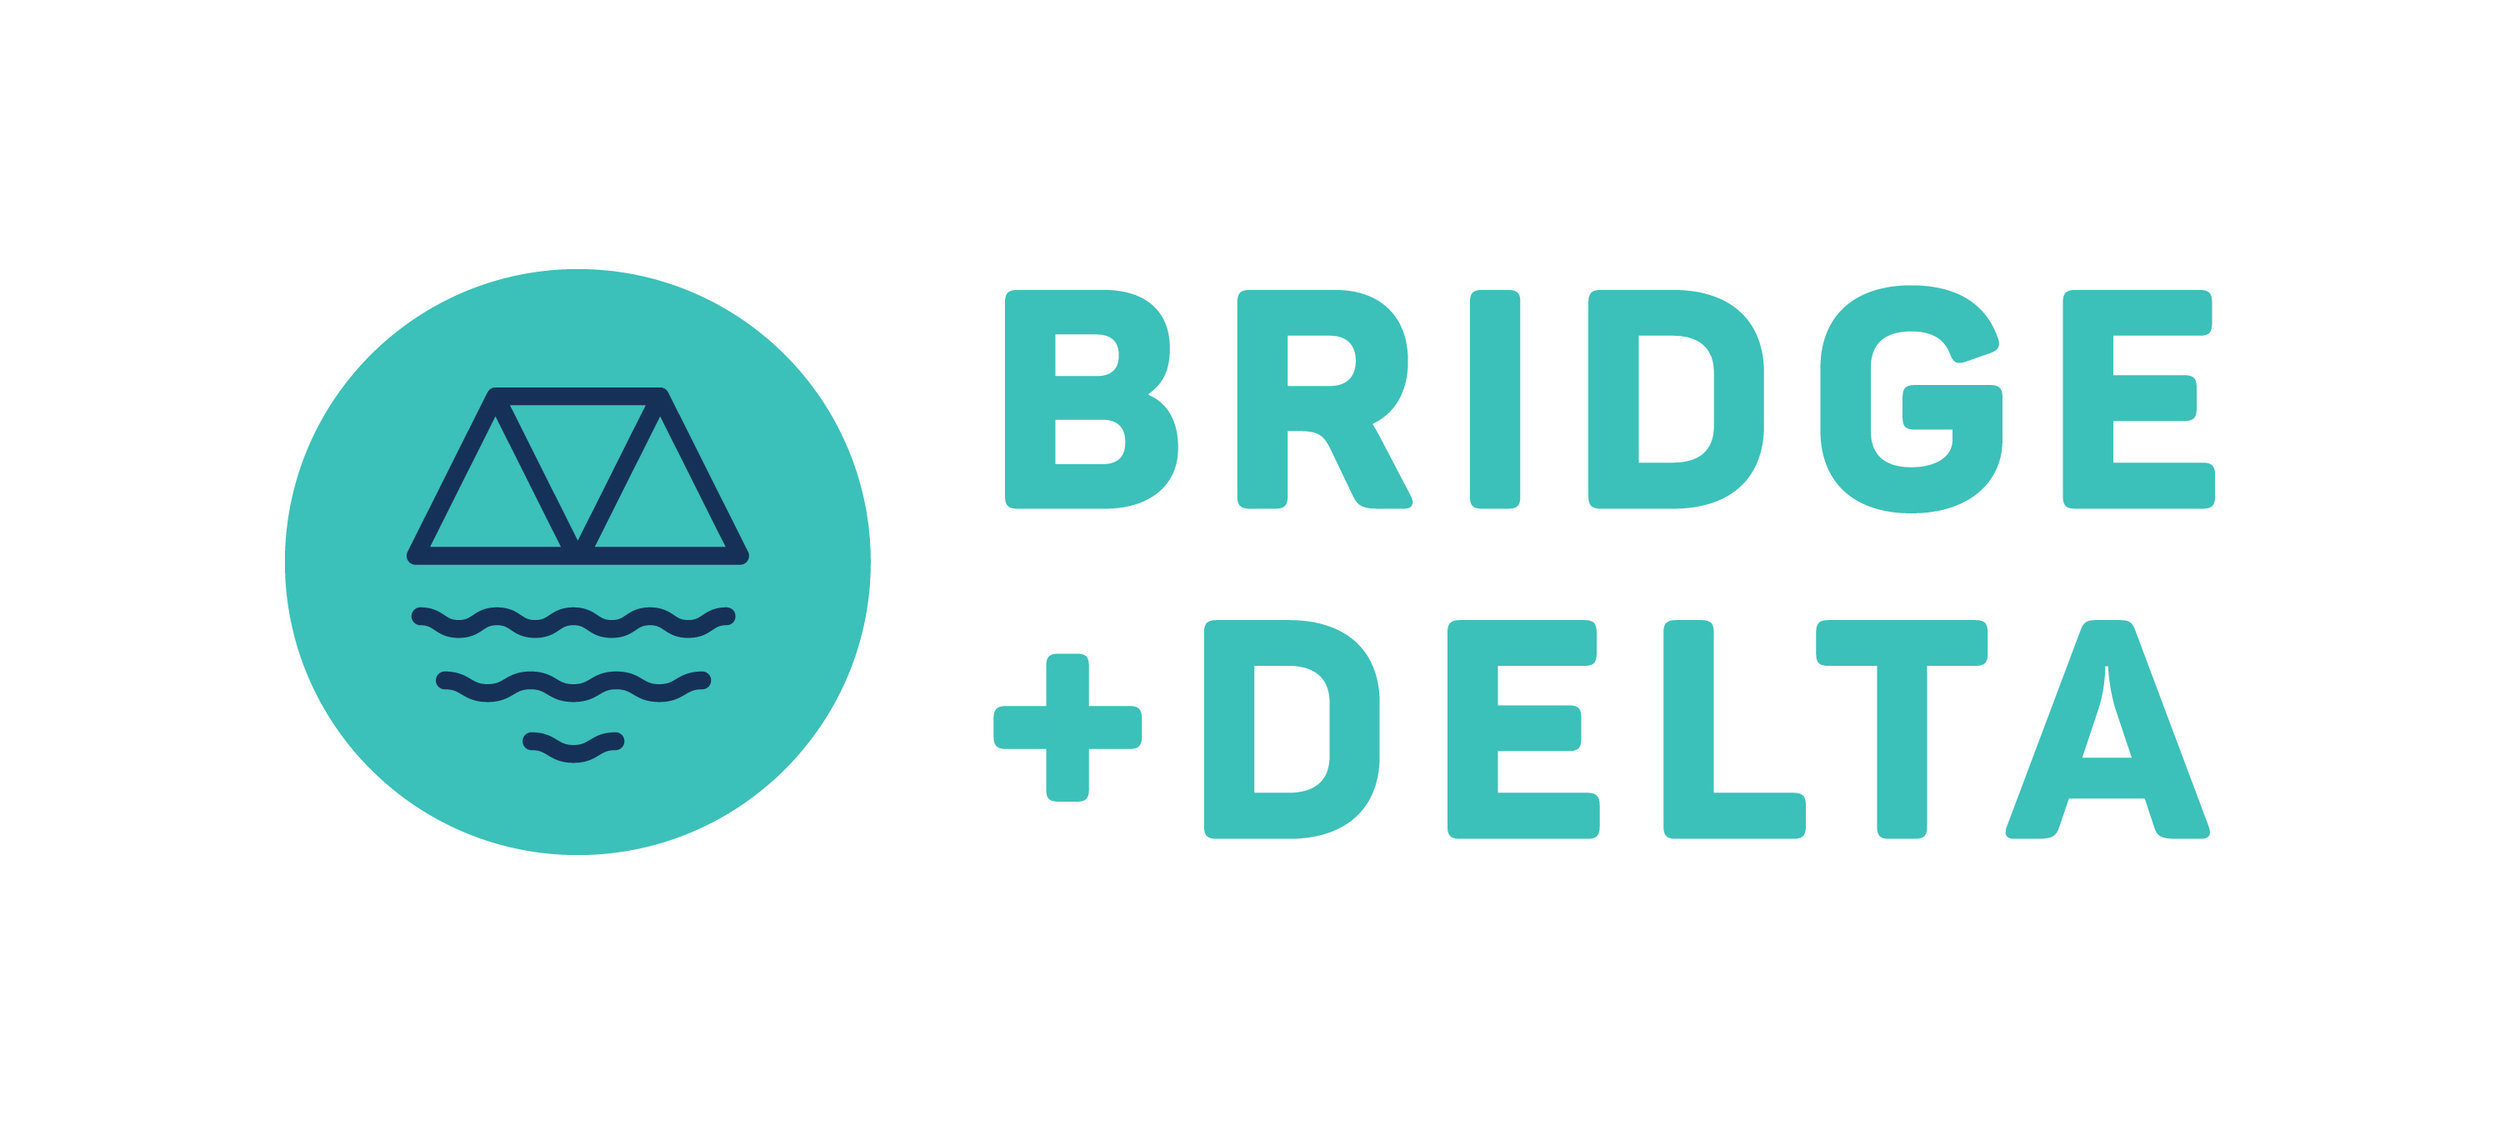 Bridge + Delta